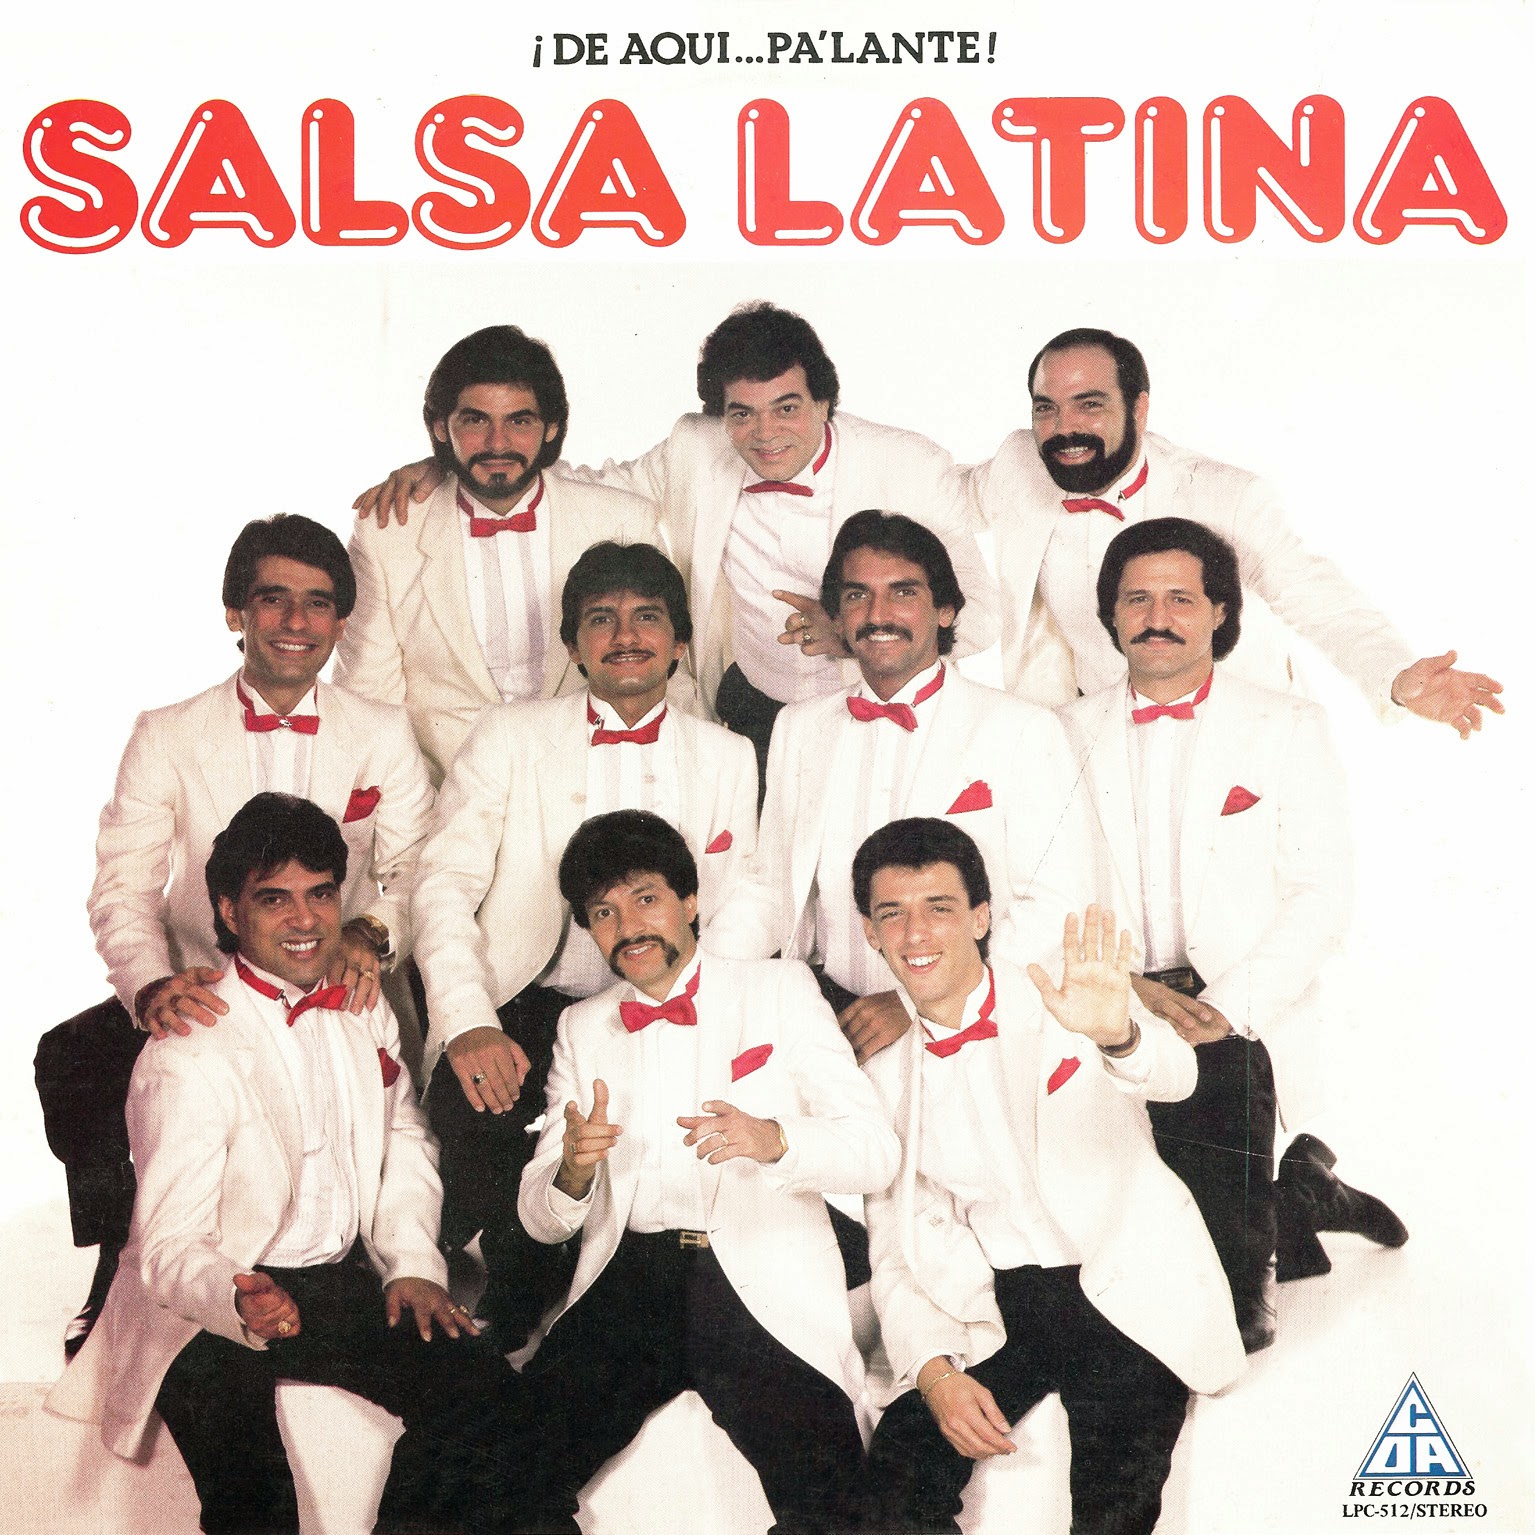 La Salsa Romantica De Sebas Orquesta Salsa Latina De Aquí Pa´lante